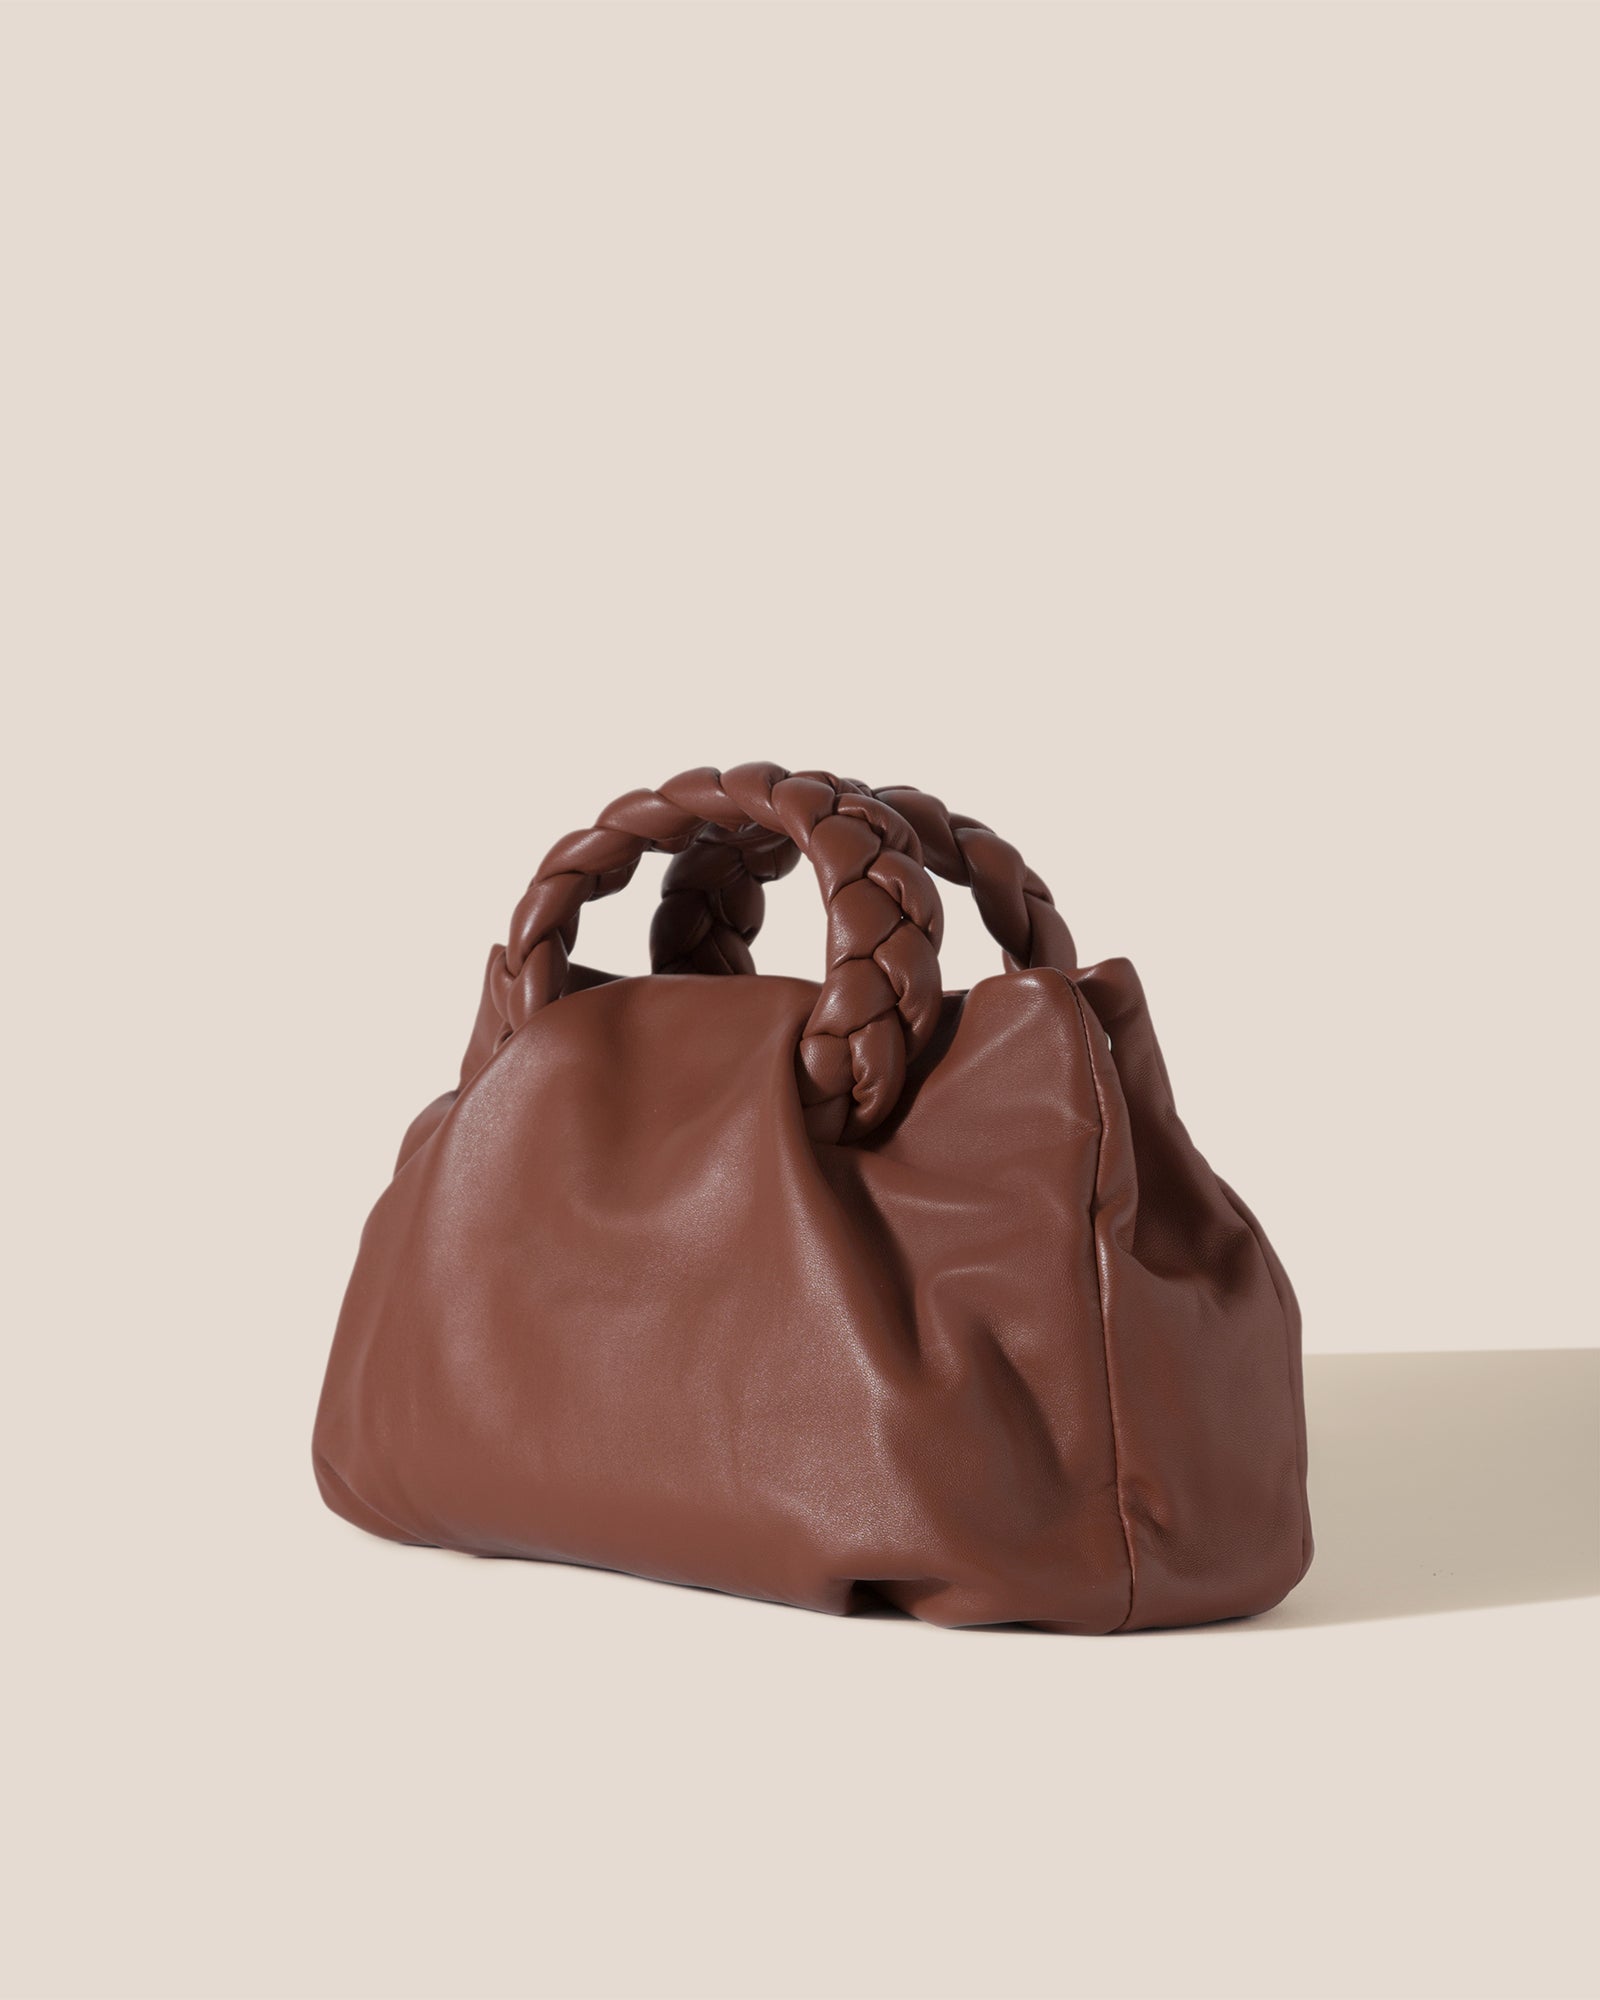 Totes bags Hereu - Bombon braided handle leather handbag - BOMBONCHESTNUT